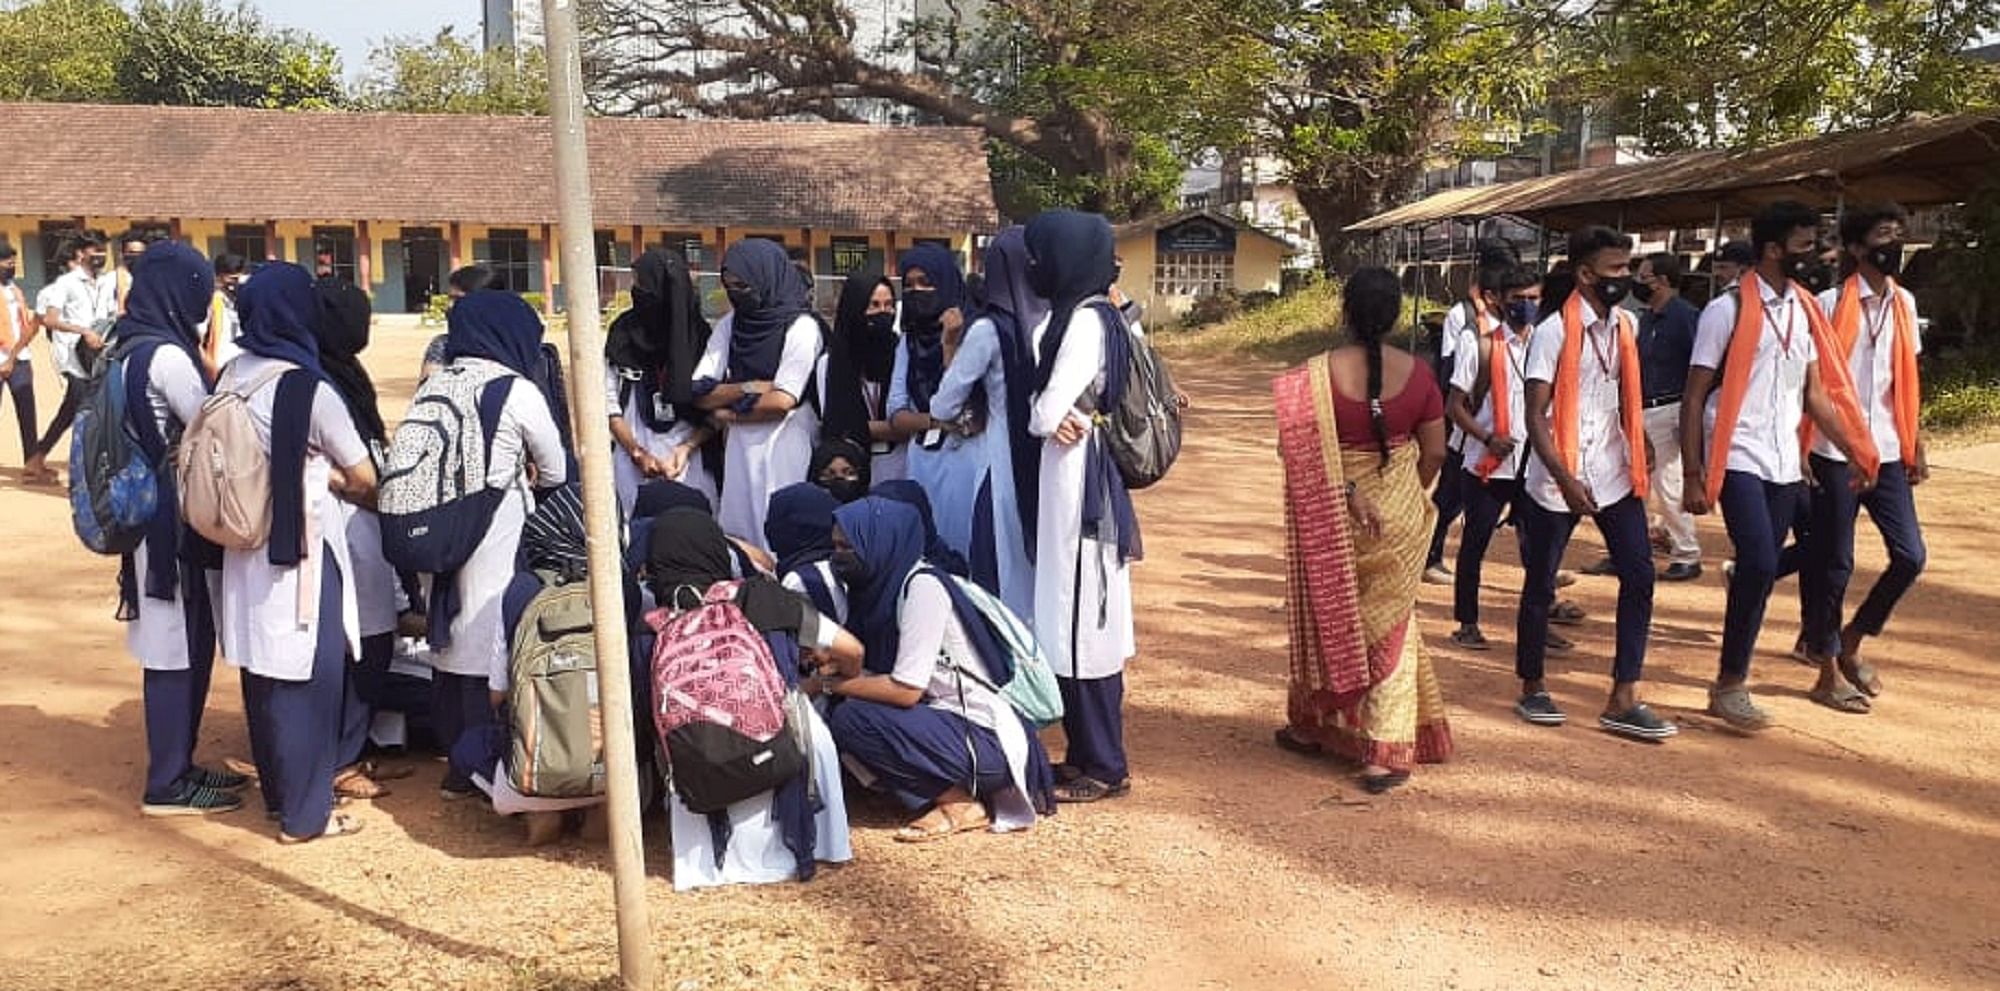 The Karnataka hijab controversy has reached the Aligarh Muslim University (AMU) in Uttar Pradesh. Credit: DH Photo from Karnataka